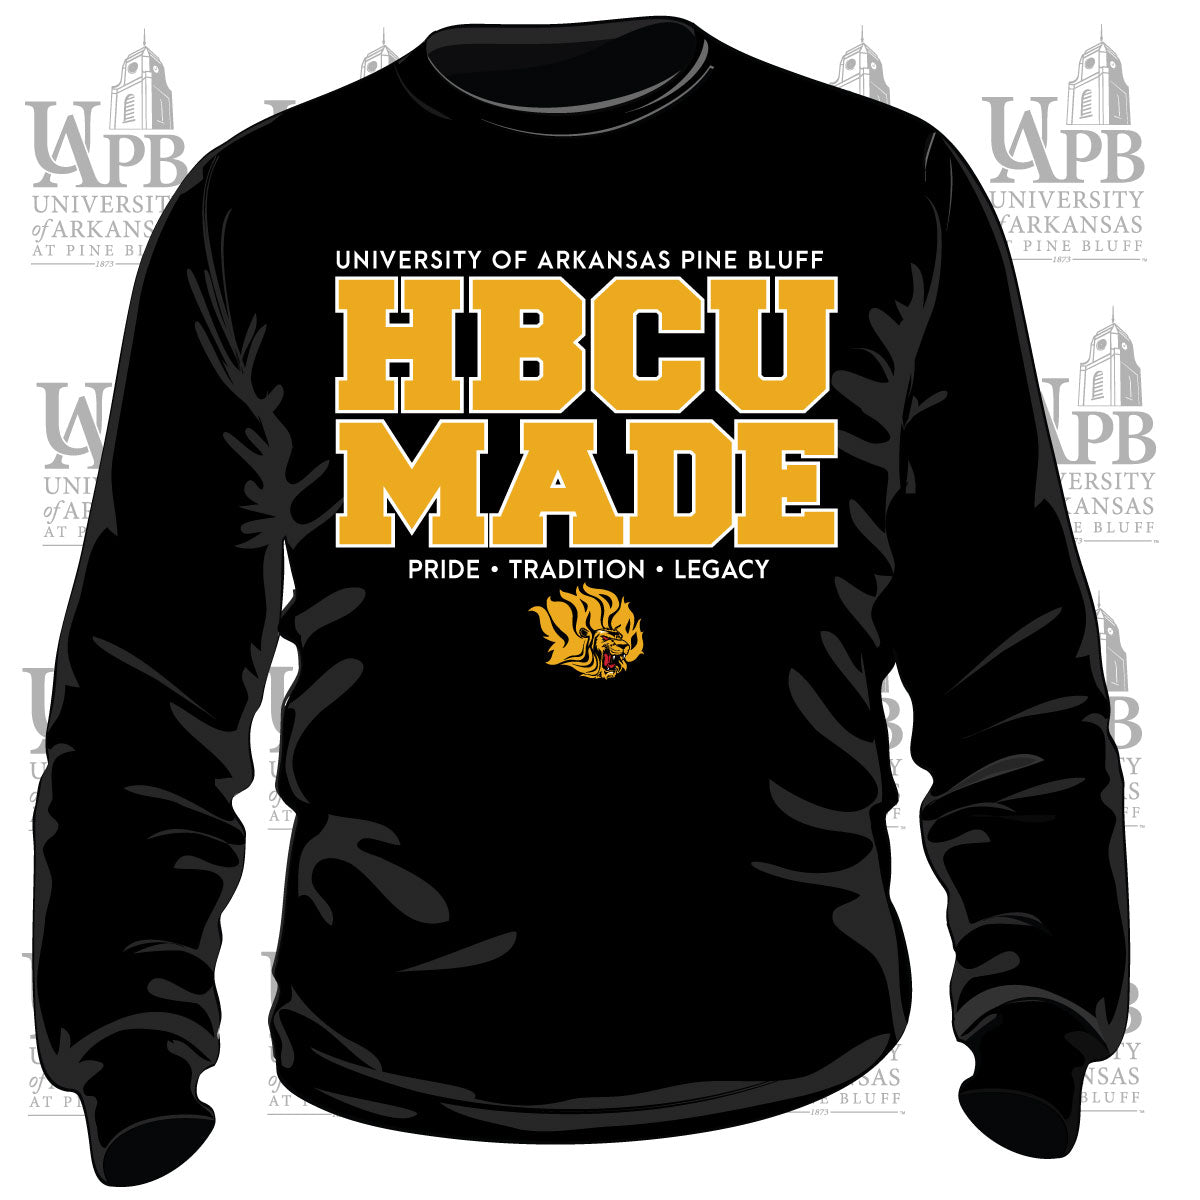 Arkansas at Pine Bluff | HBCU MADE Black unisex Sweatshirt (N)